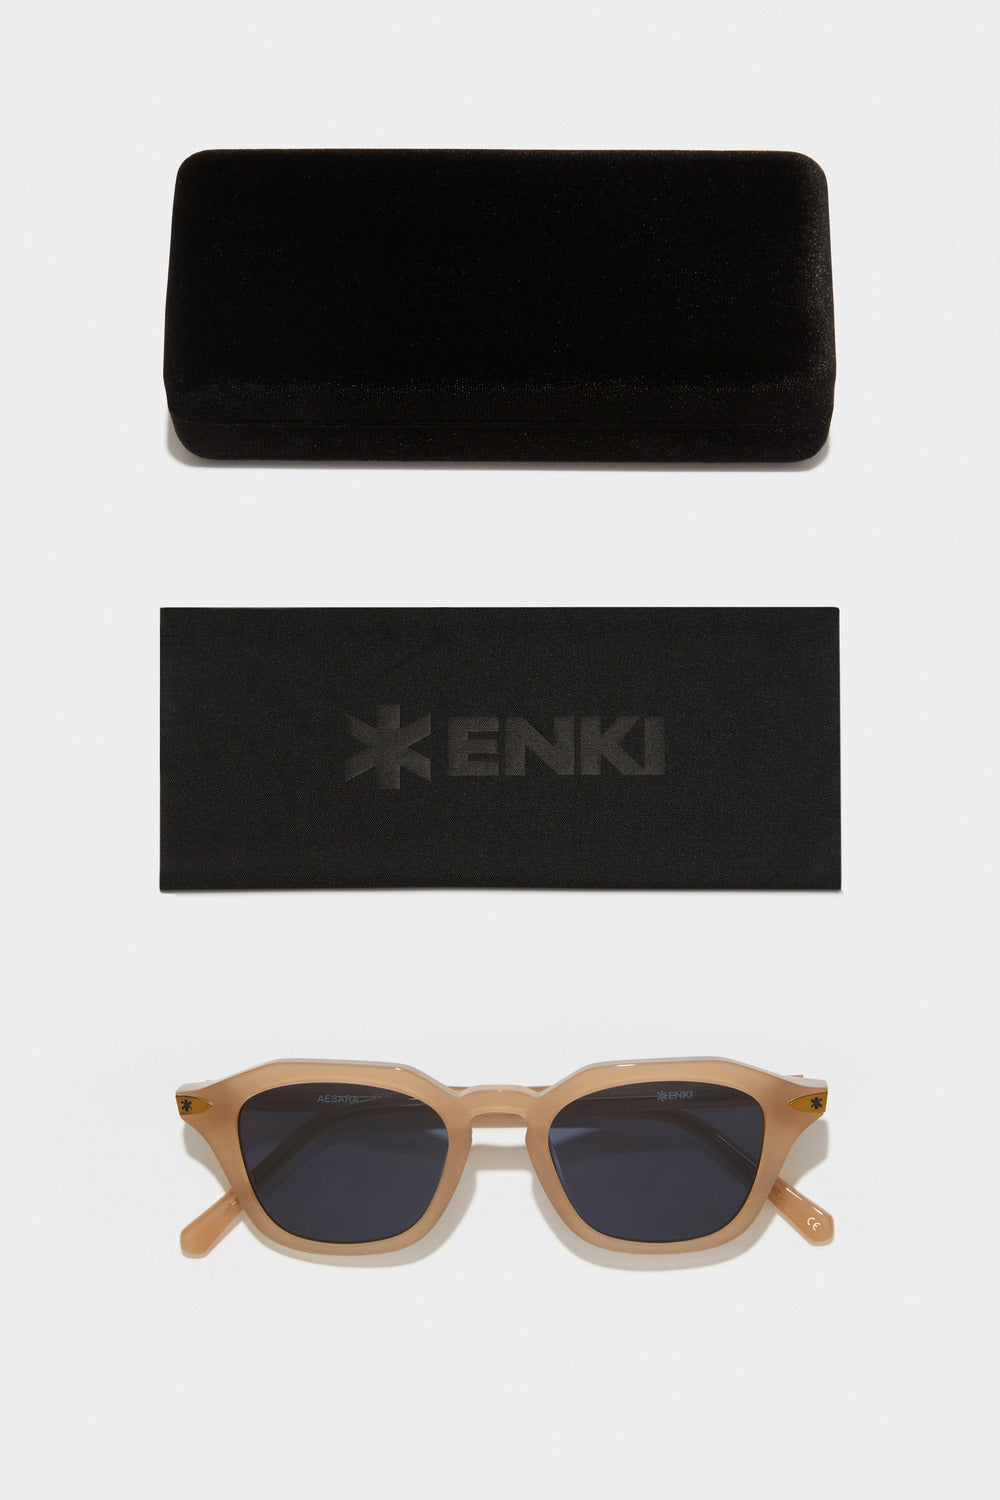 www.enkieyewear.com Aesara Men’s and Women’s Sunglasses